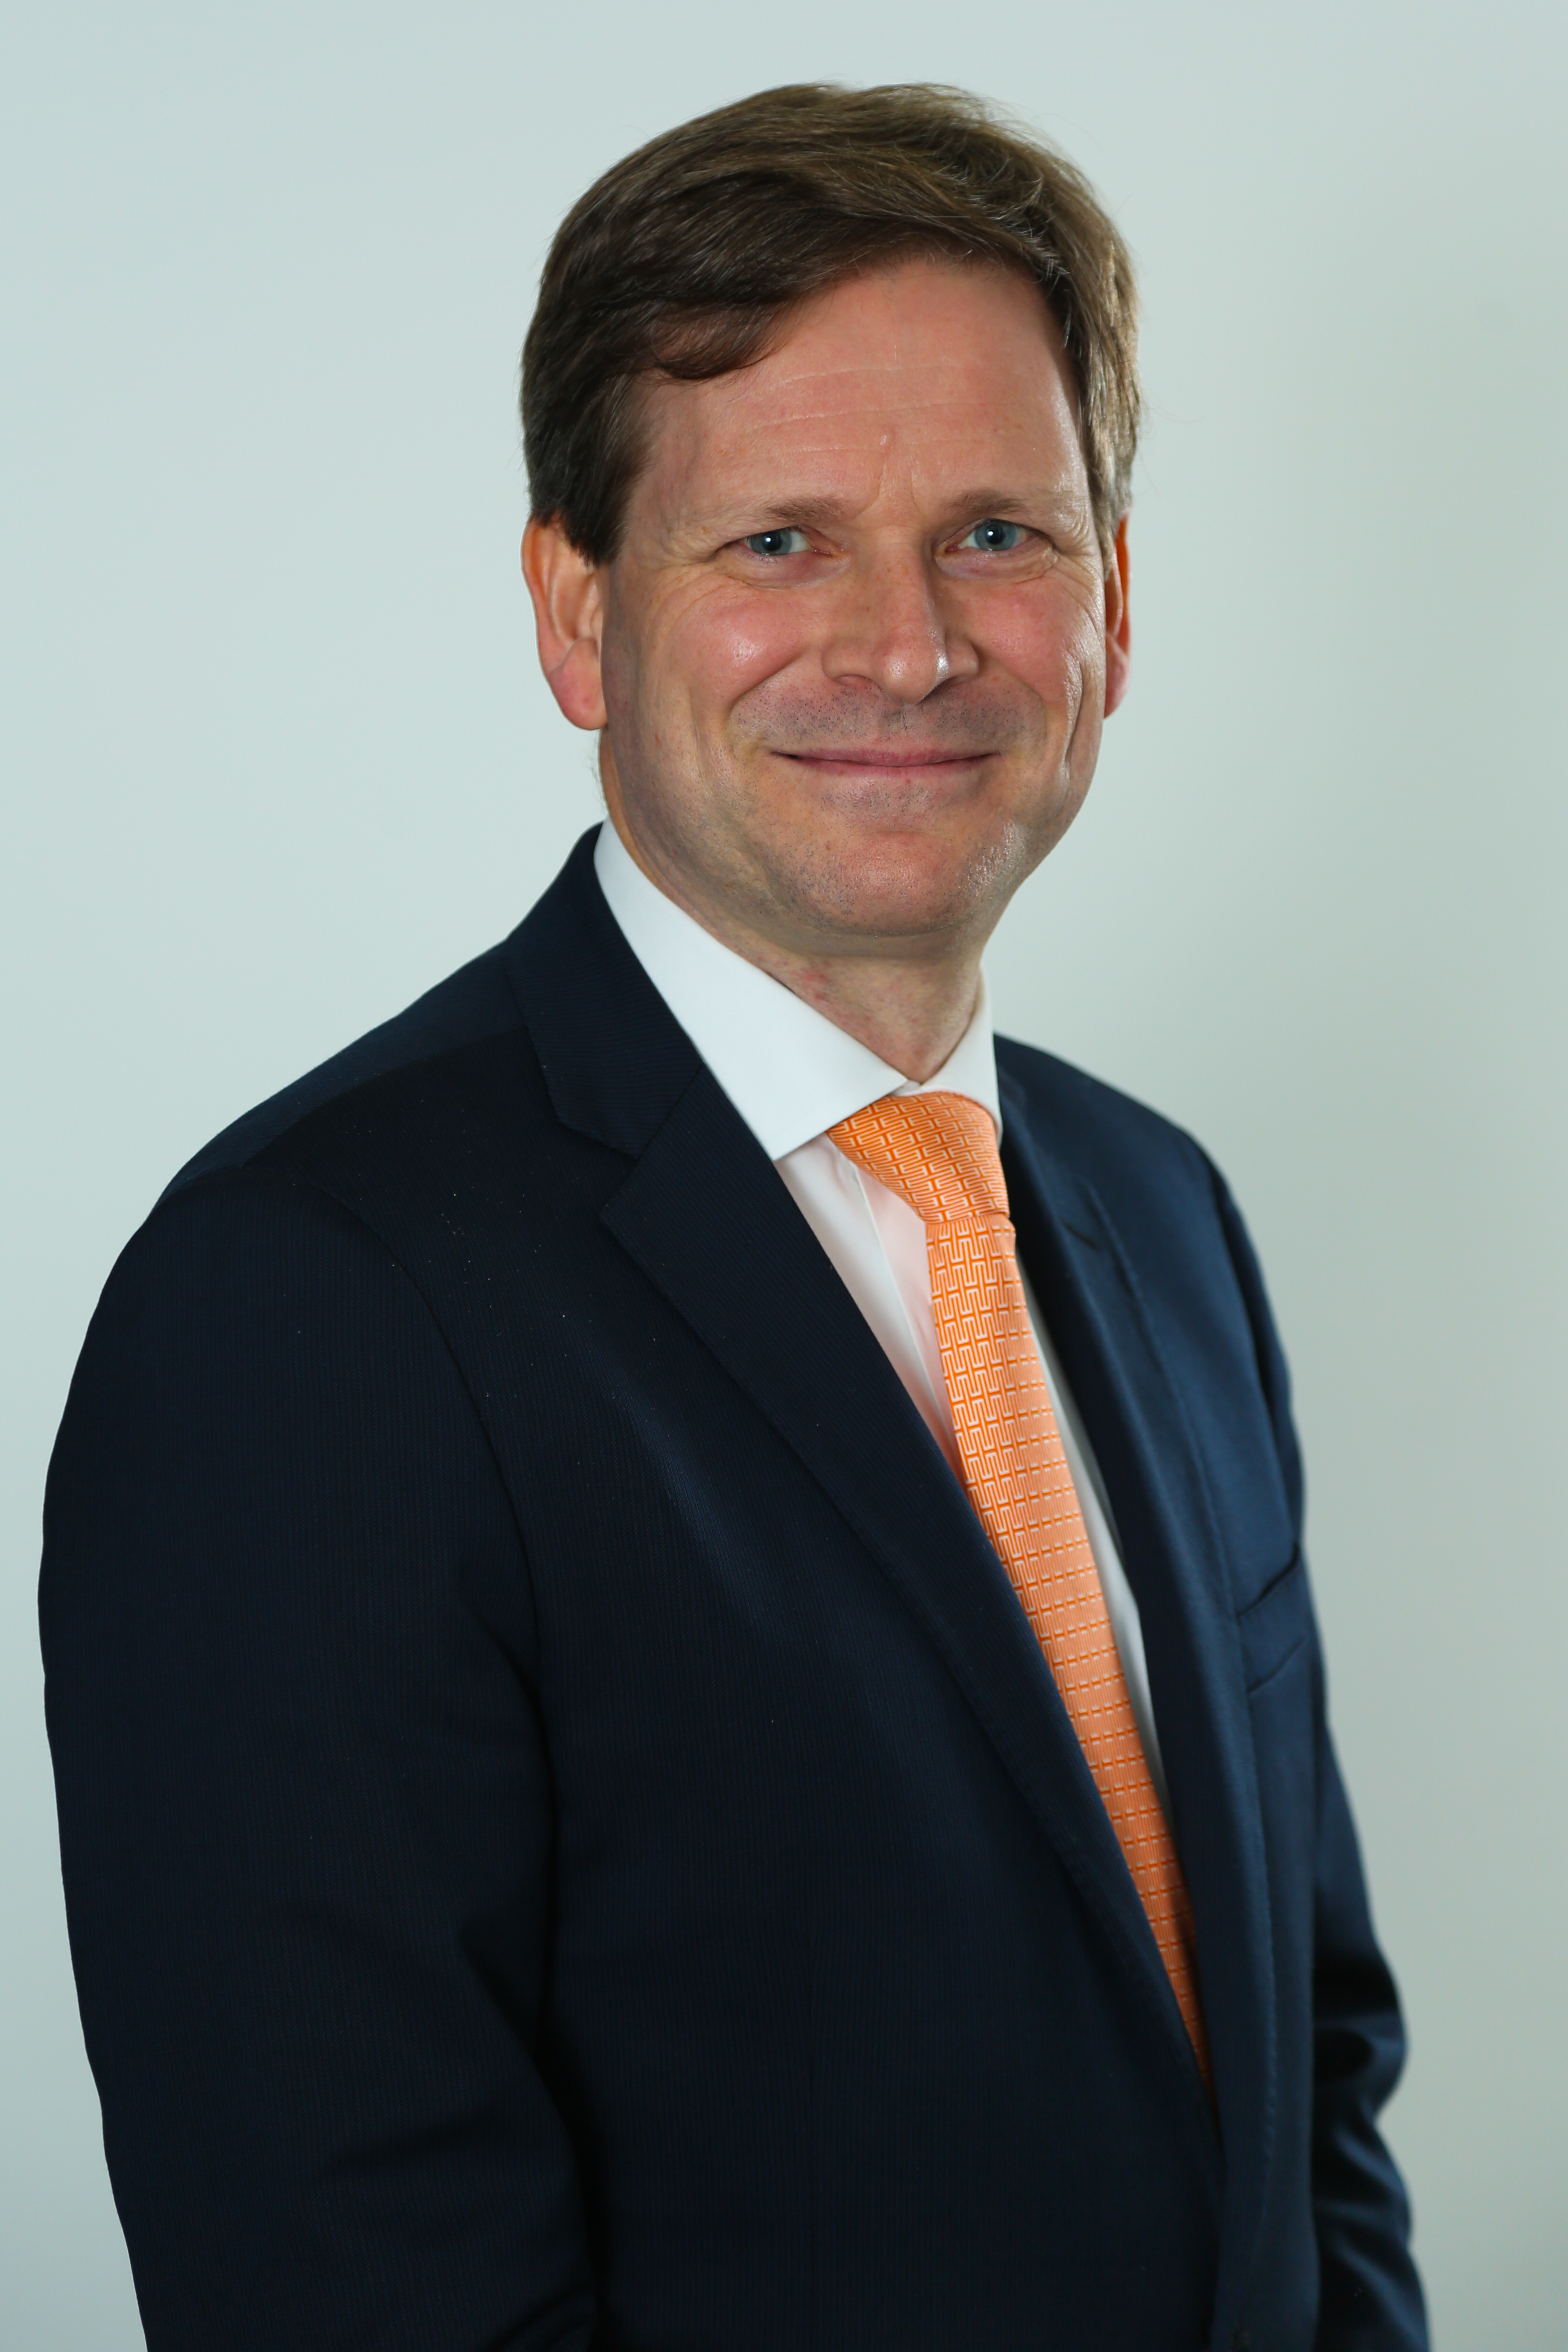 Coenraad Vrolijk, Allianz Regional Chief Executive Officer Africa 